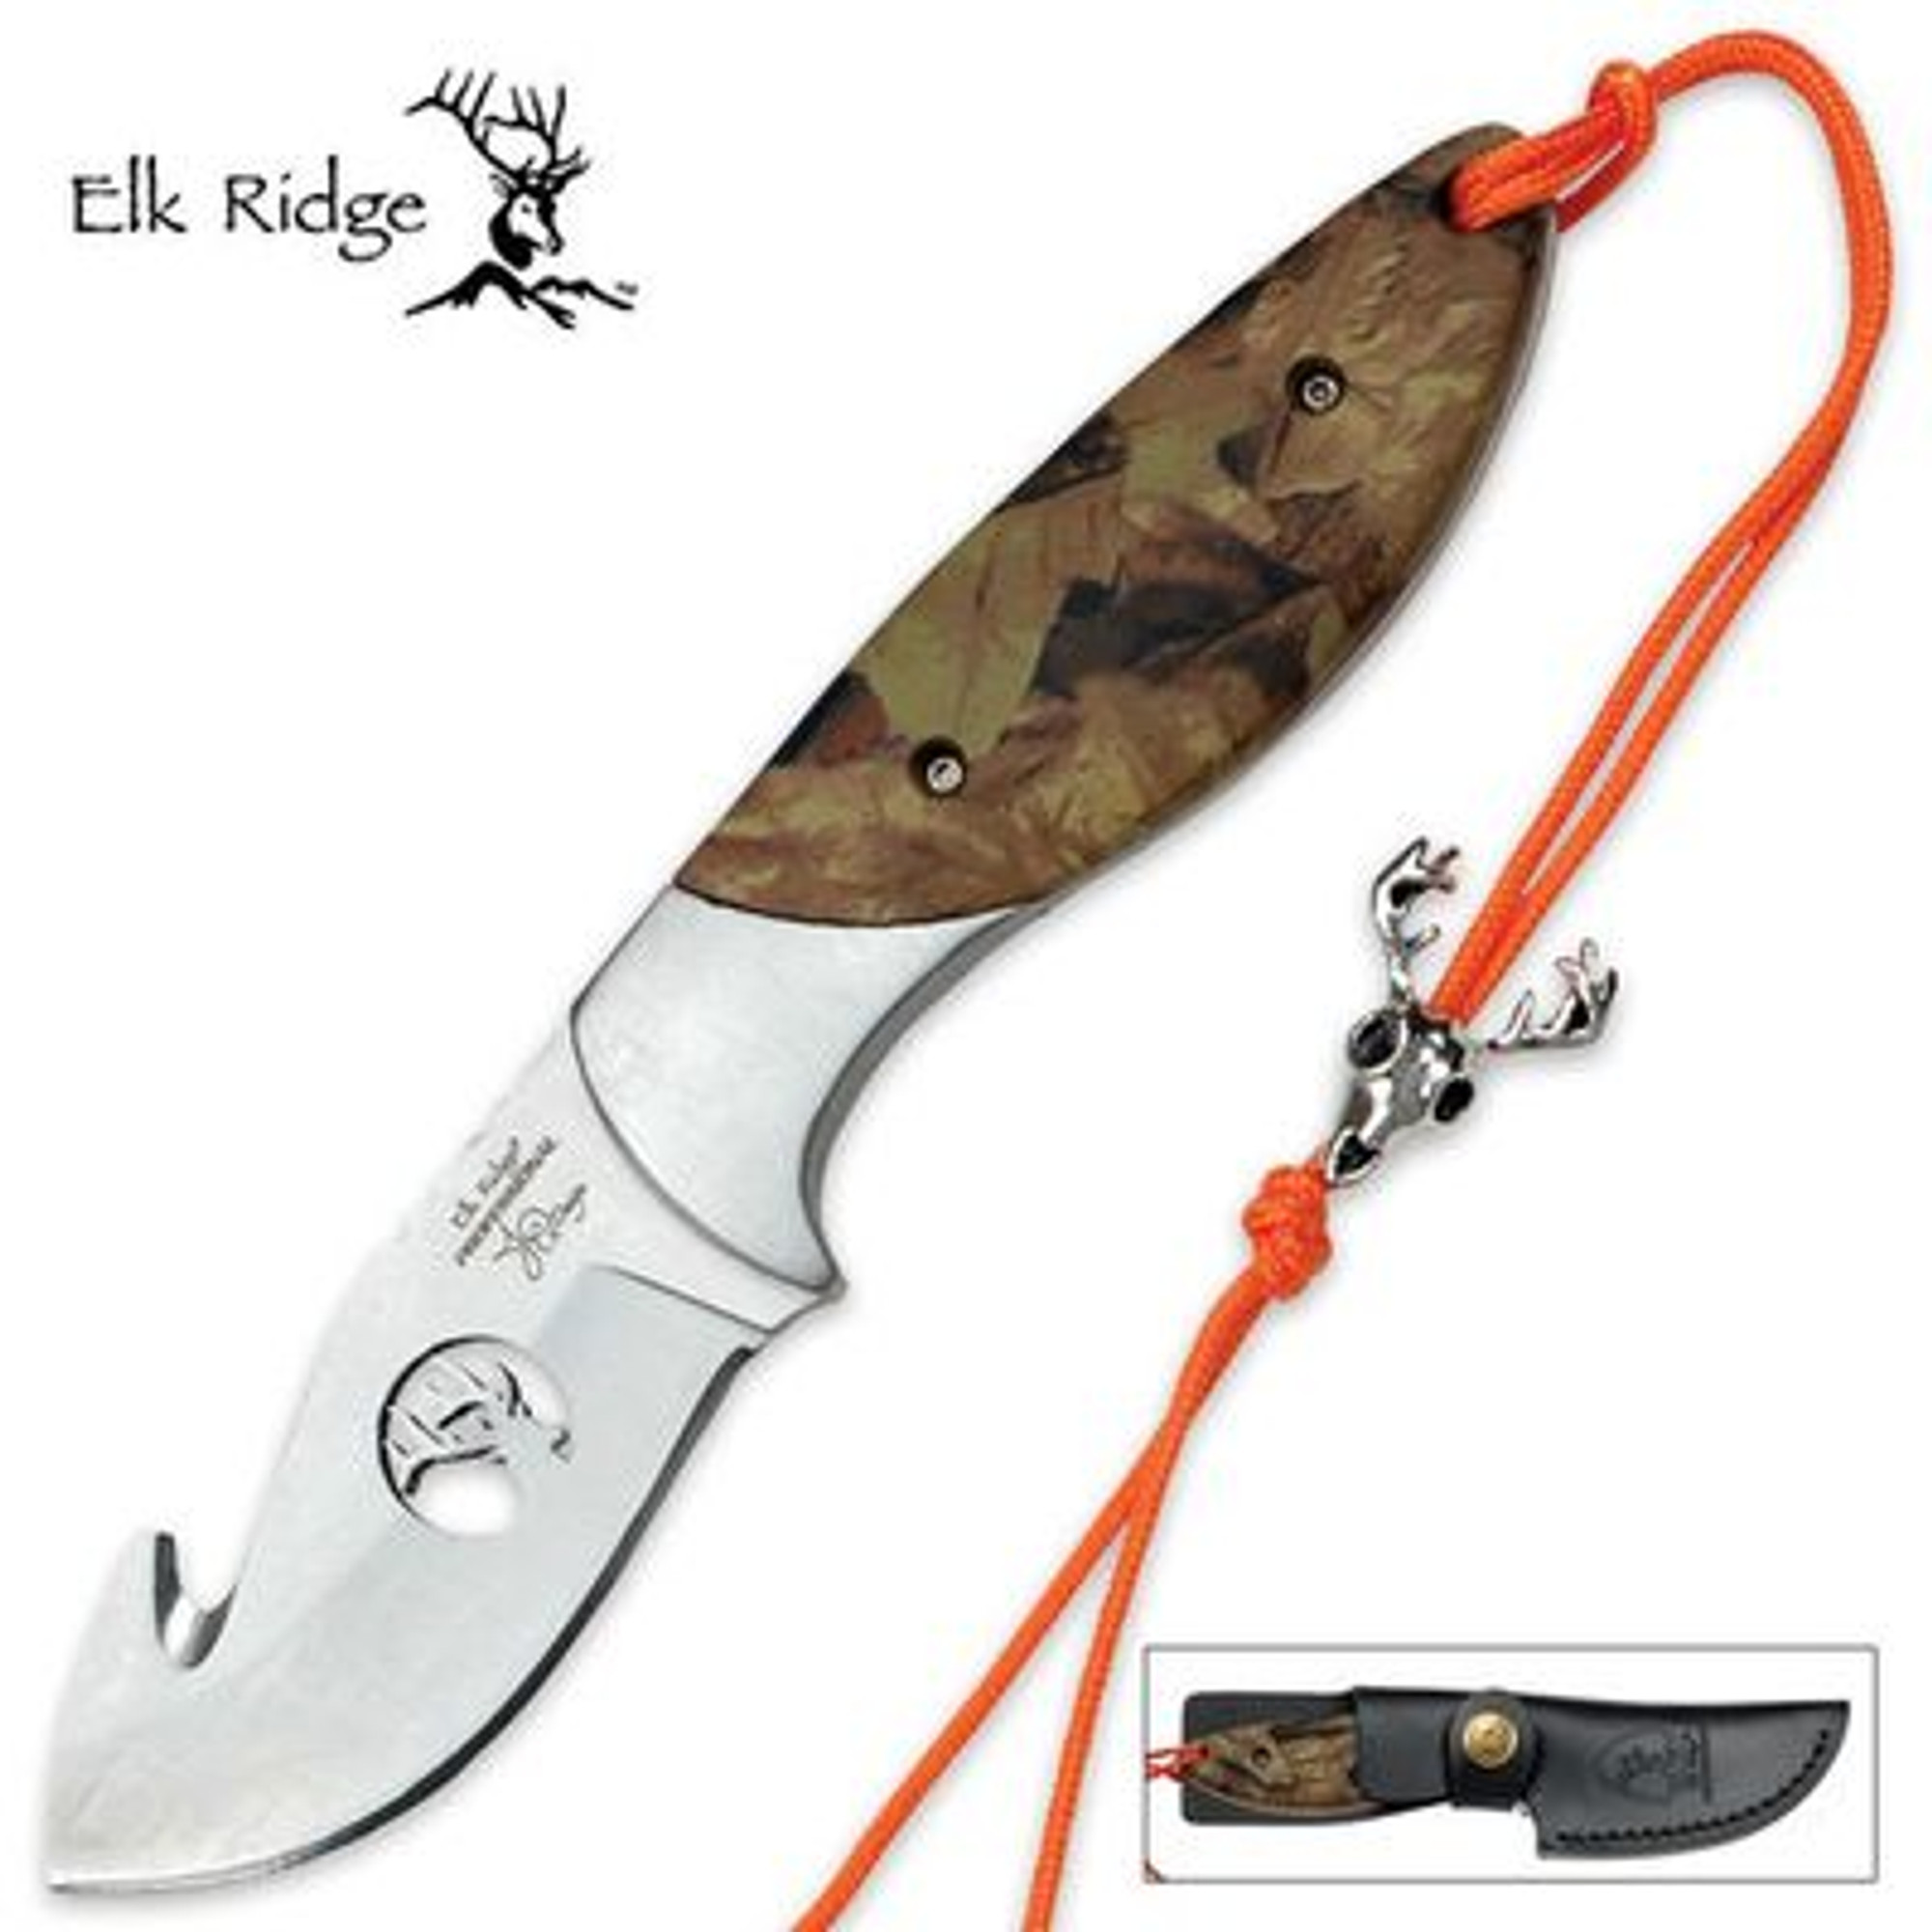 Elk Ridge Professional Fixed Blade Gut Hook Knife - Camouflage